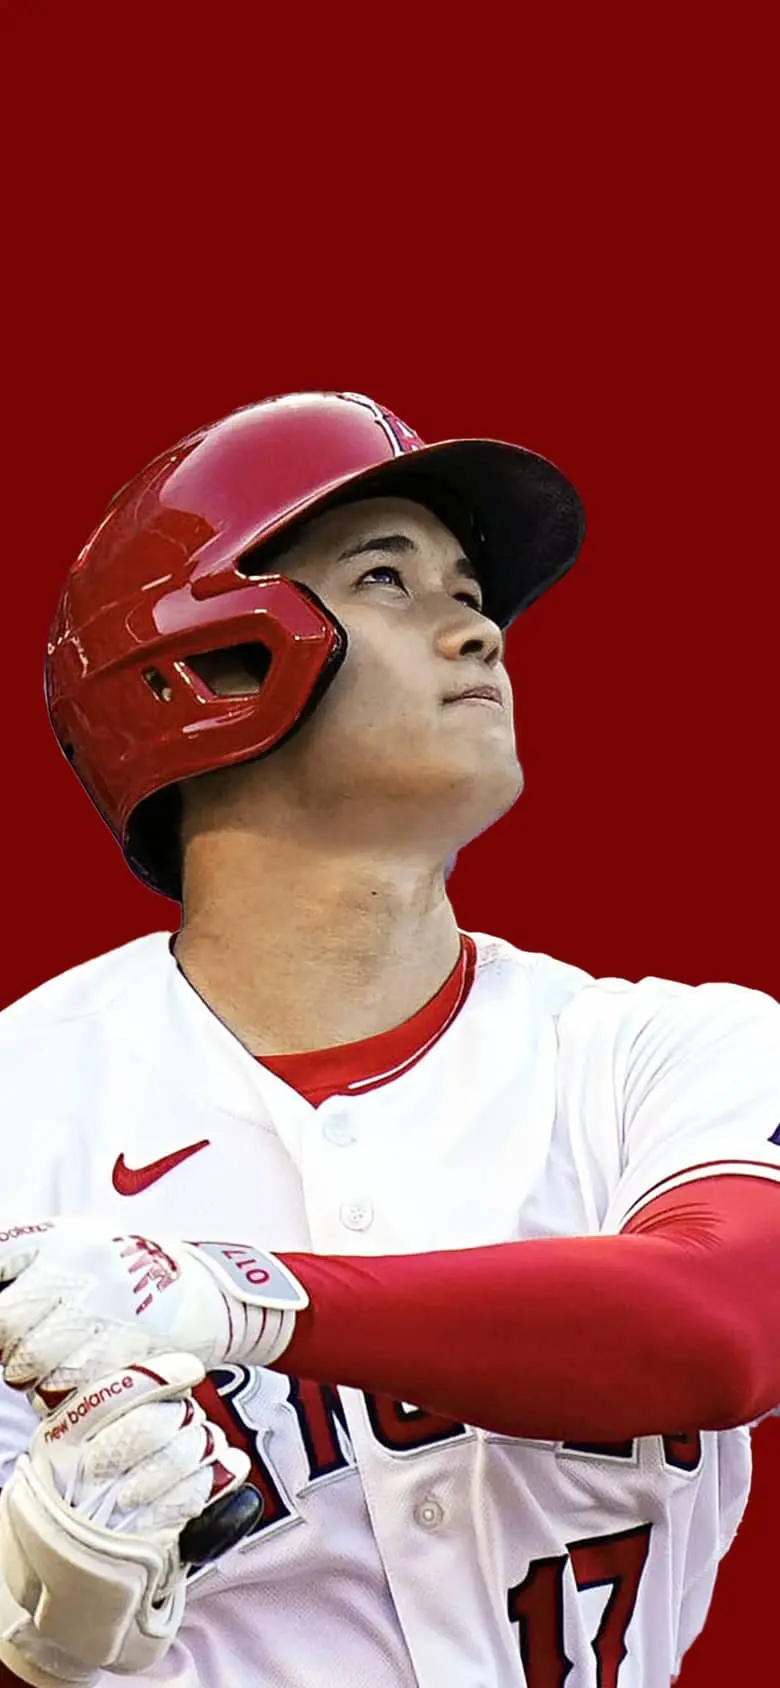 Shohei Ohtani hitting a home run